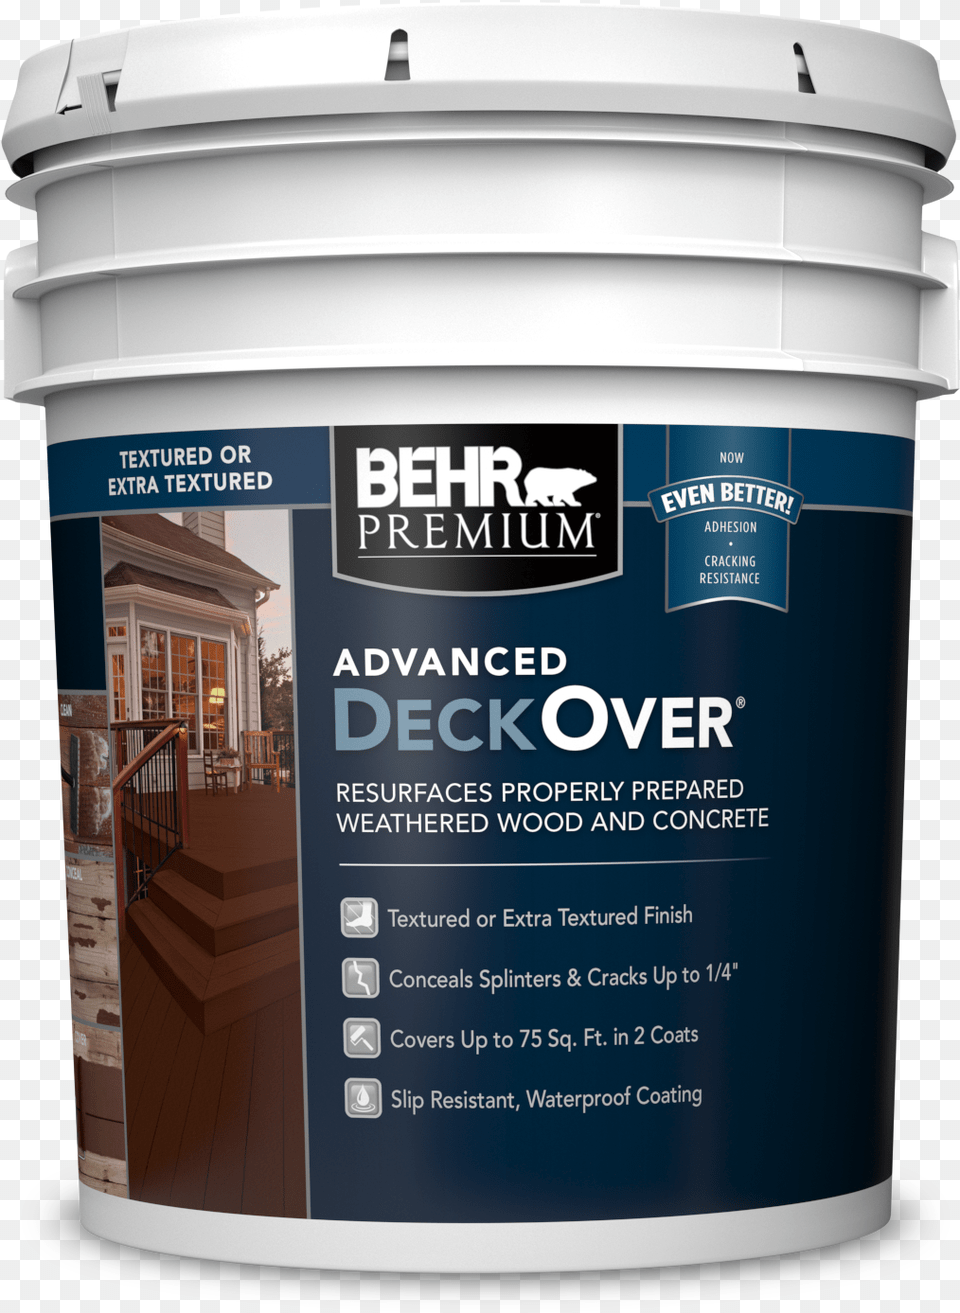 Behr Premium Advanced Deckover Textured 5 Gallon Image Behr Pro Exterior Satin, Paint Container, Plant, Bottle, Shaker Free Transparent Png